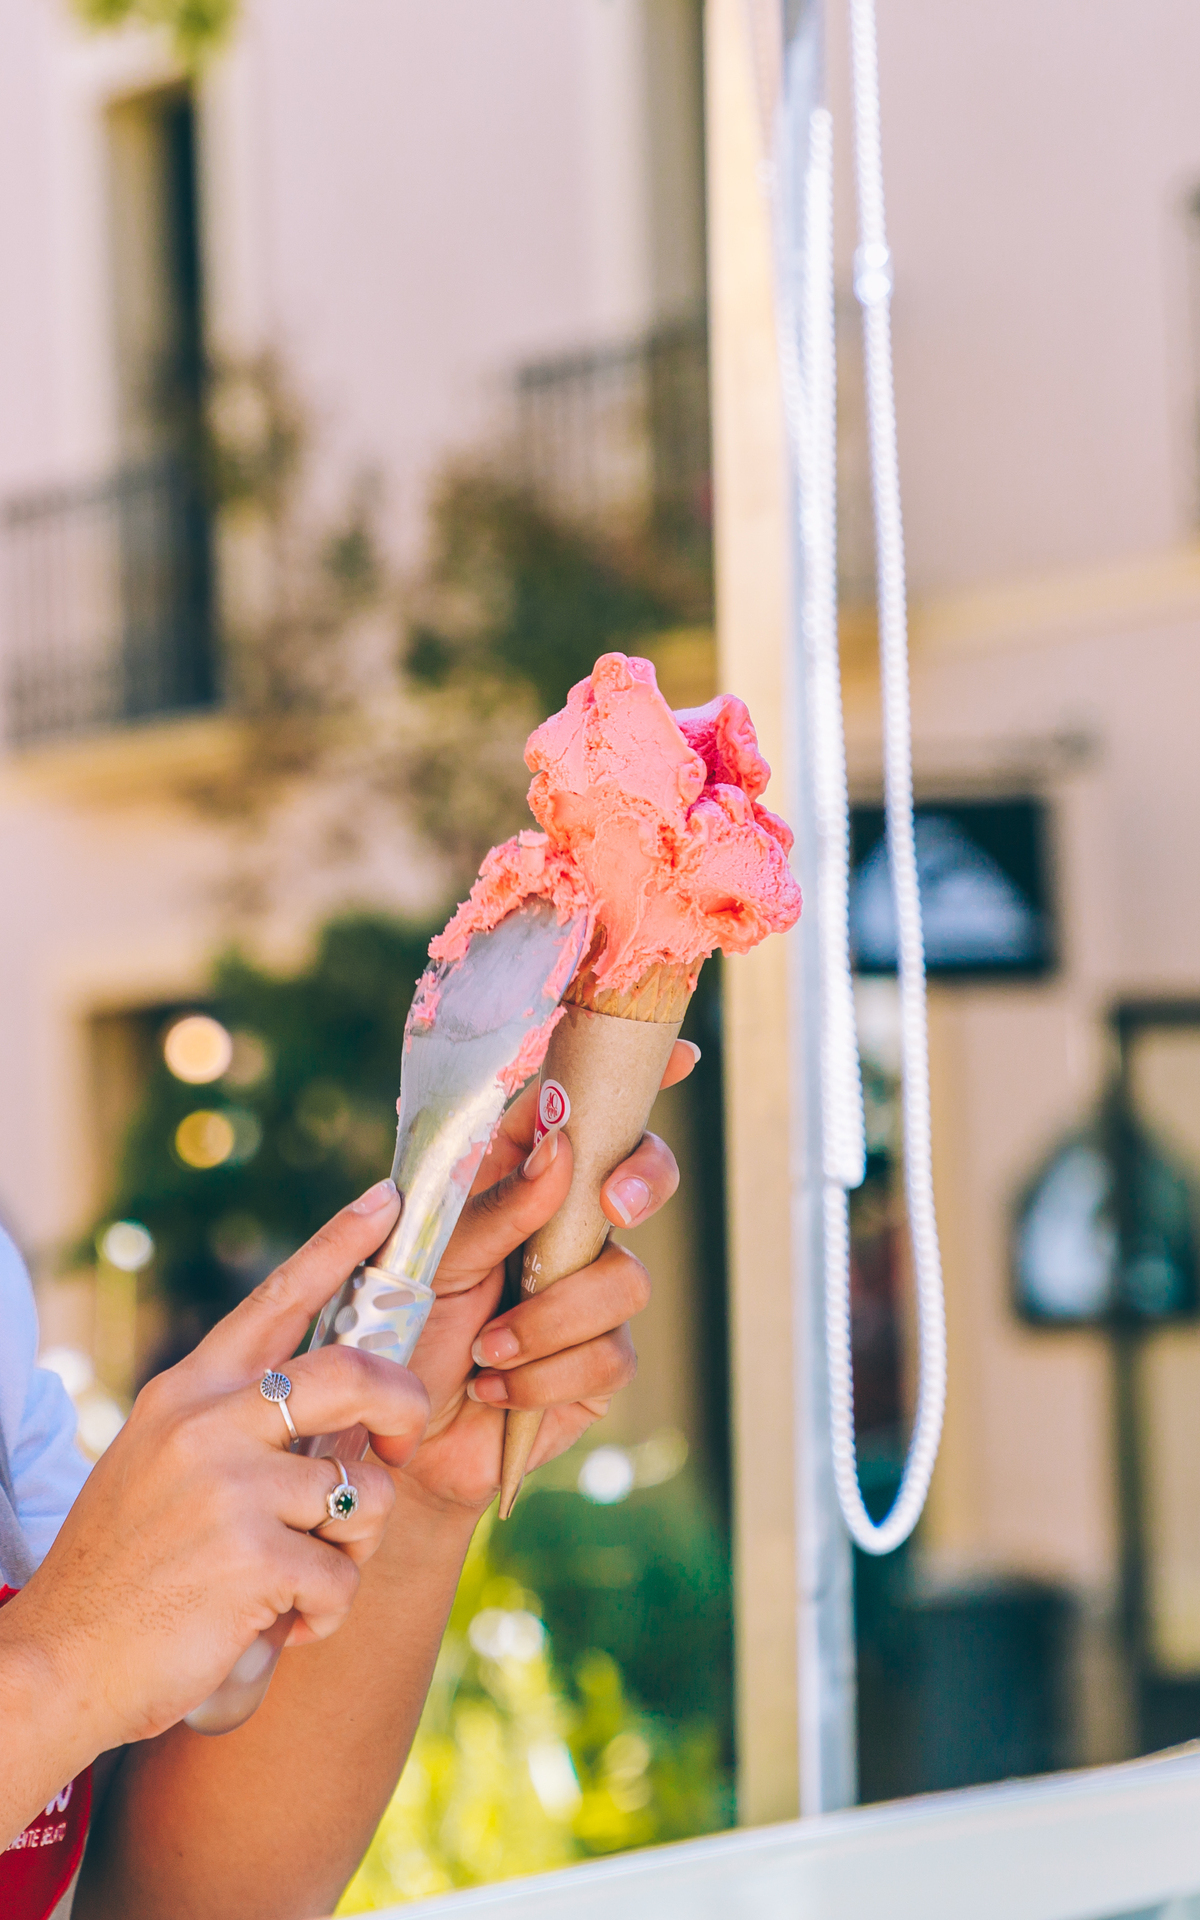 Sino strawberry and lemon ice-cream at La Roca Village